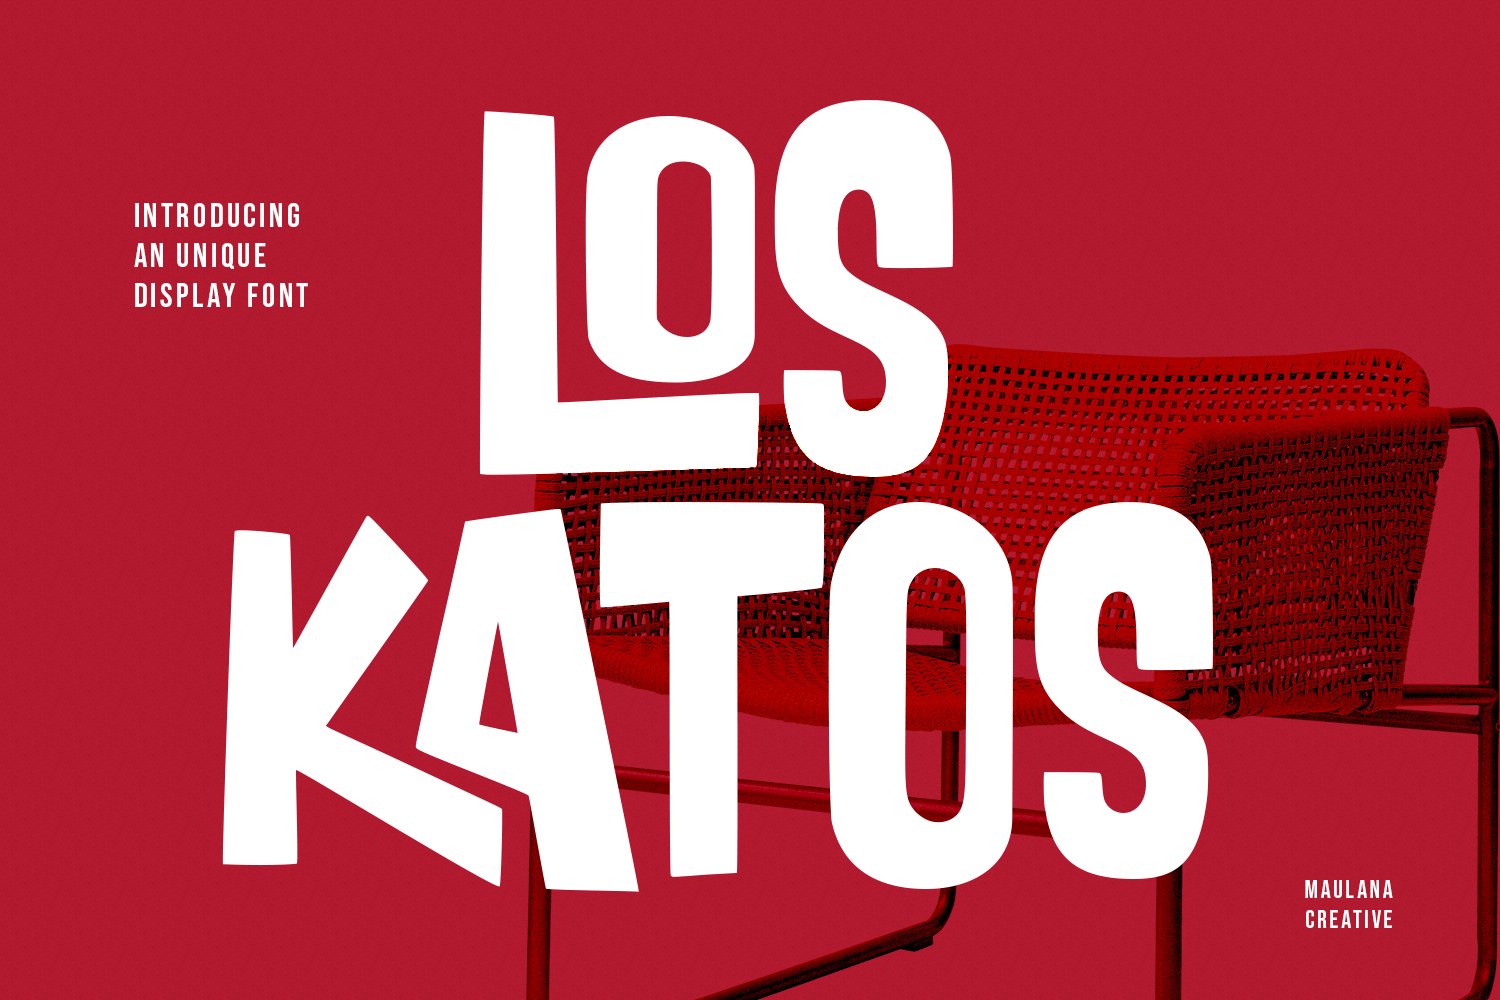 Loskatos Unique Display Font cover image.